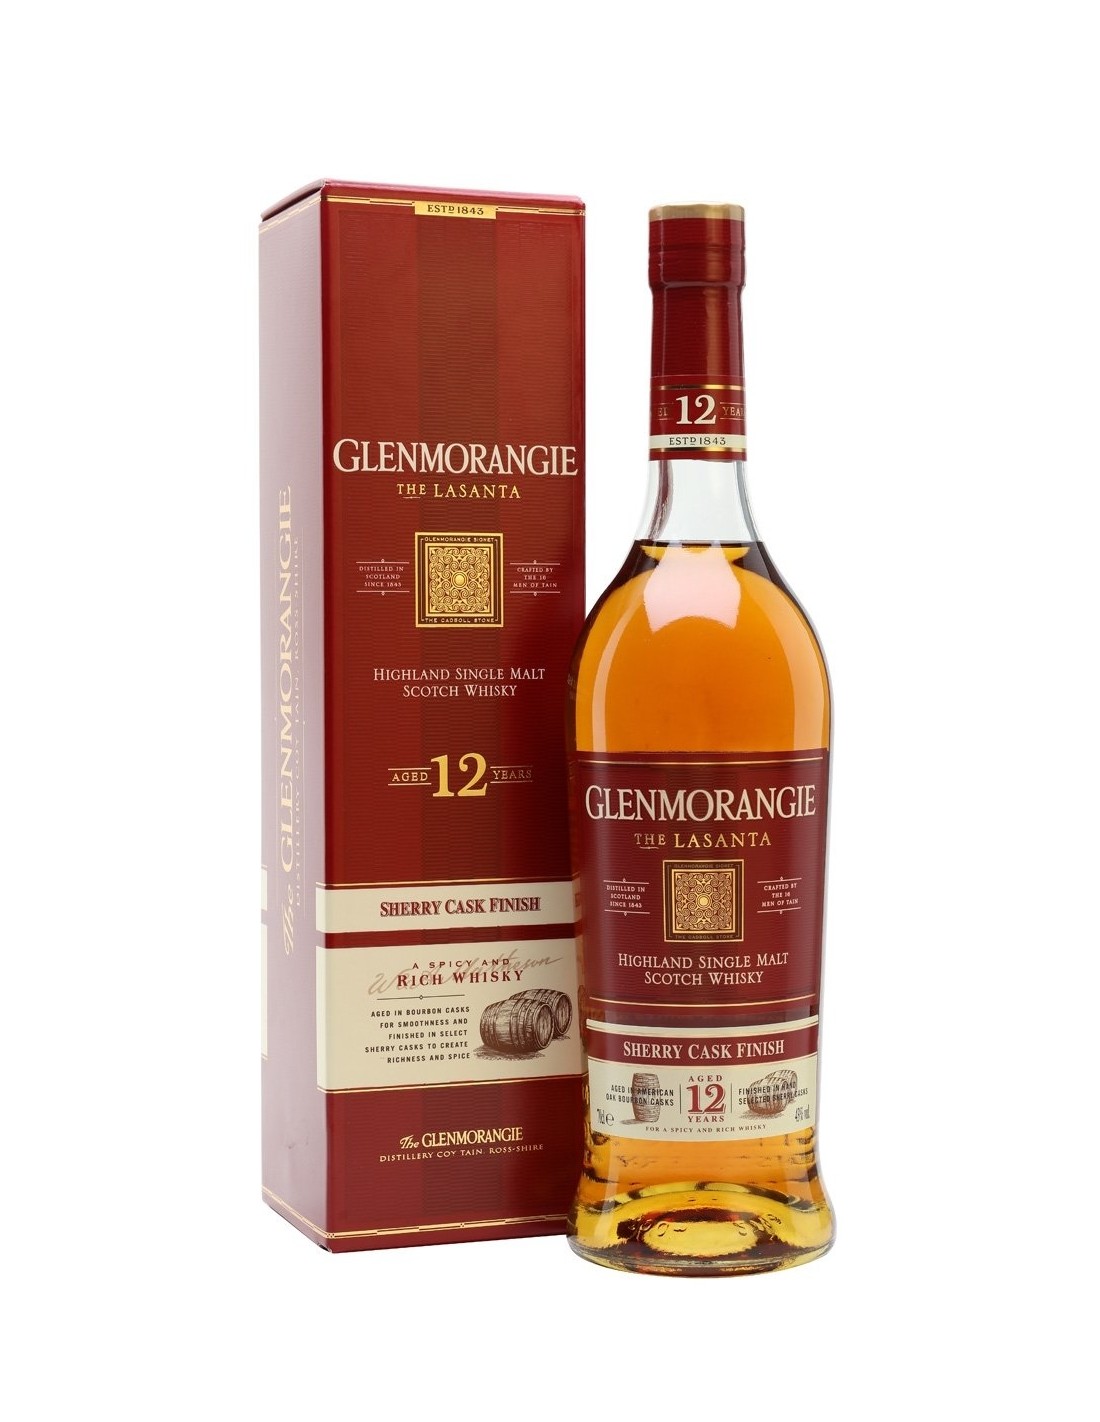 Whisky Glenmorangie Lasanta, 0.7L, 12 ani, 43% alc., Scotia alcooldiscount.ro